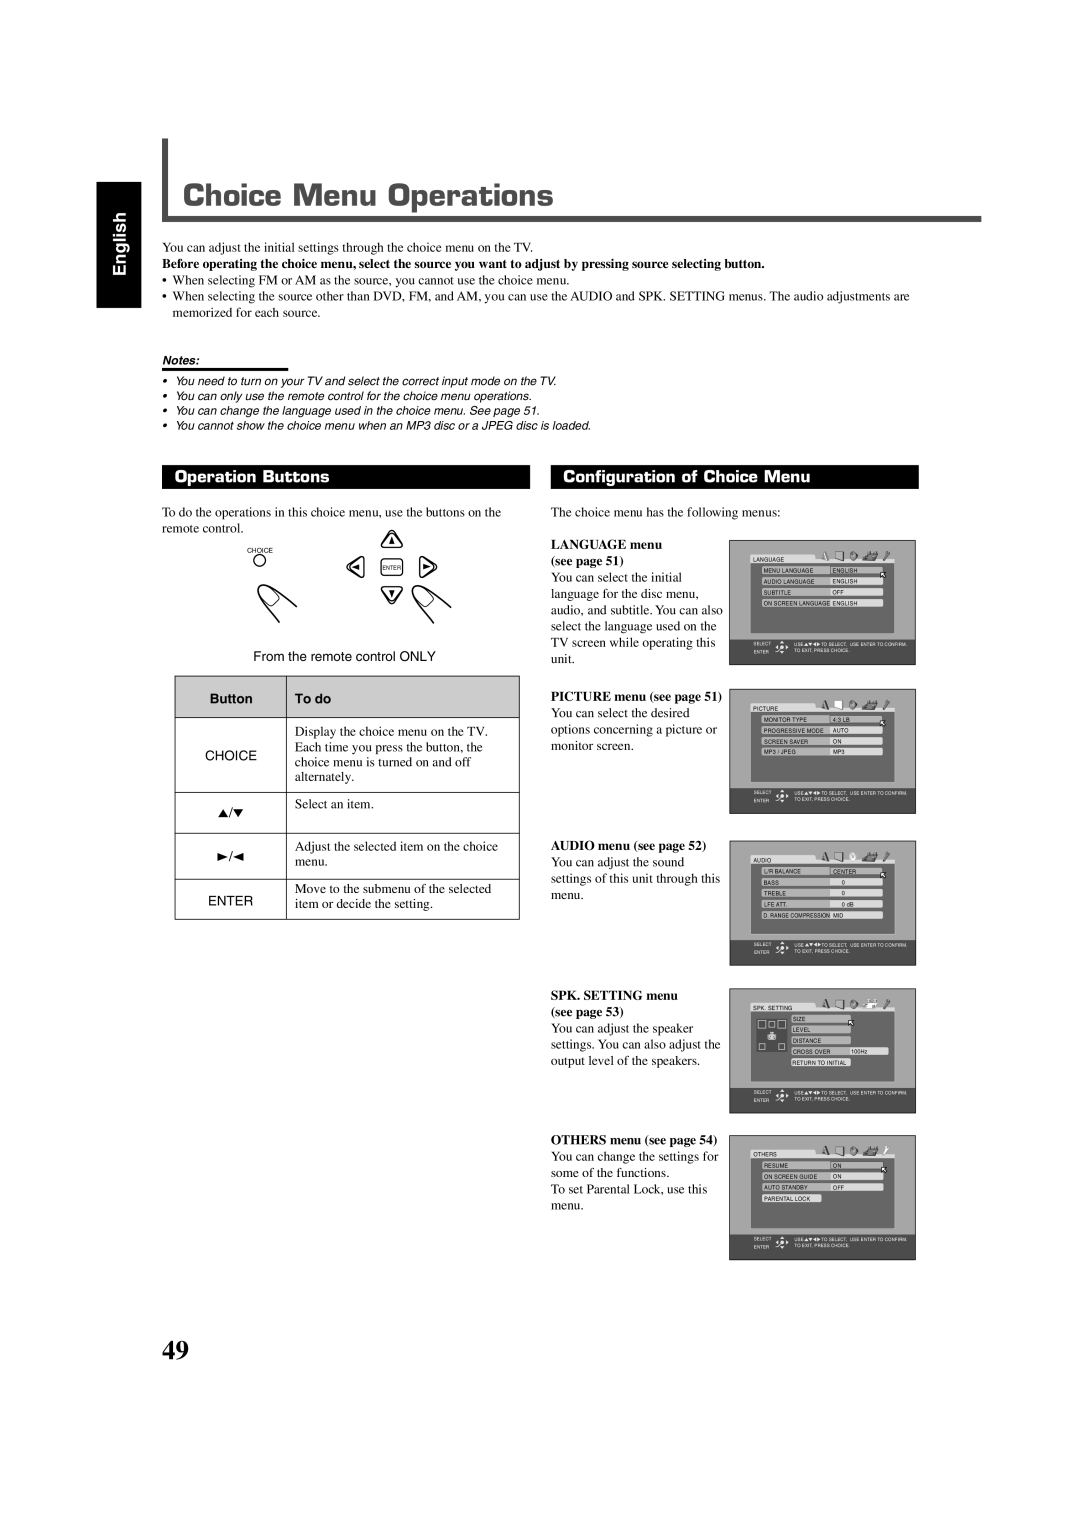 JVC RX-DV5SL Choice Menu Operations, Configuration of Choice Menu, English, Operation Buttons, LANGUAGE menu see page 